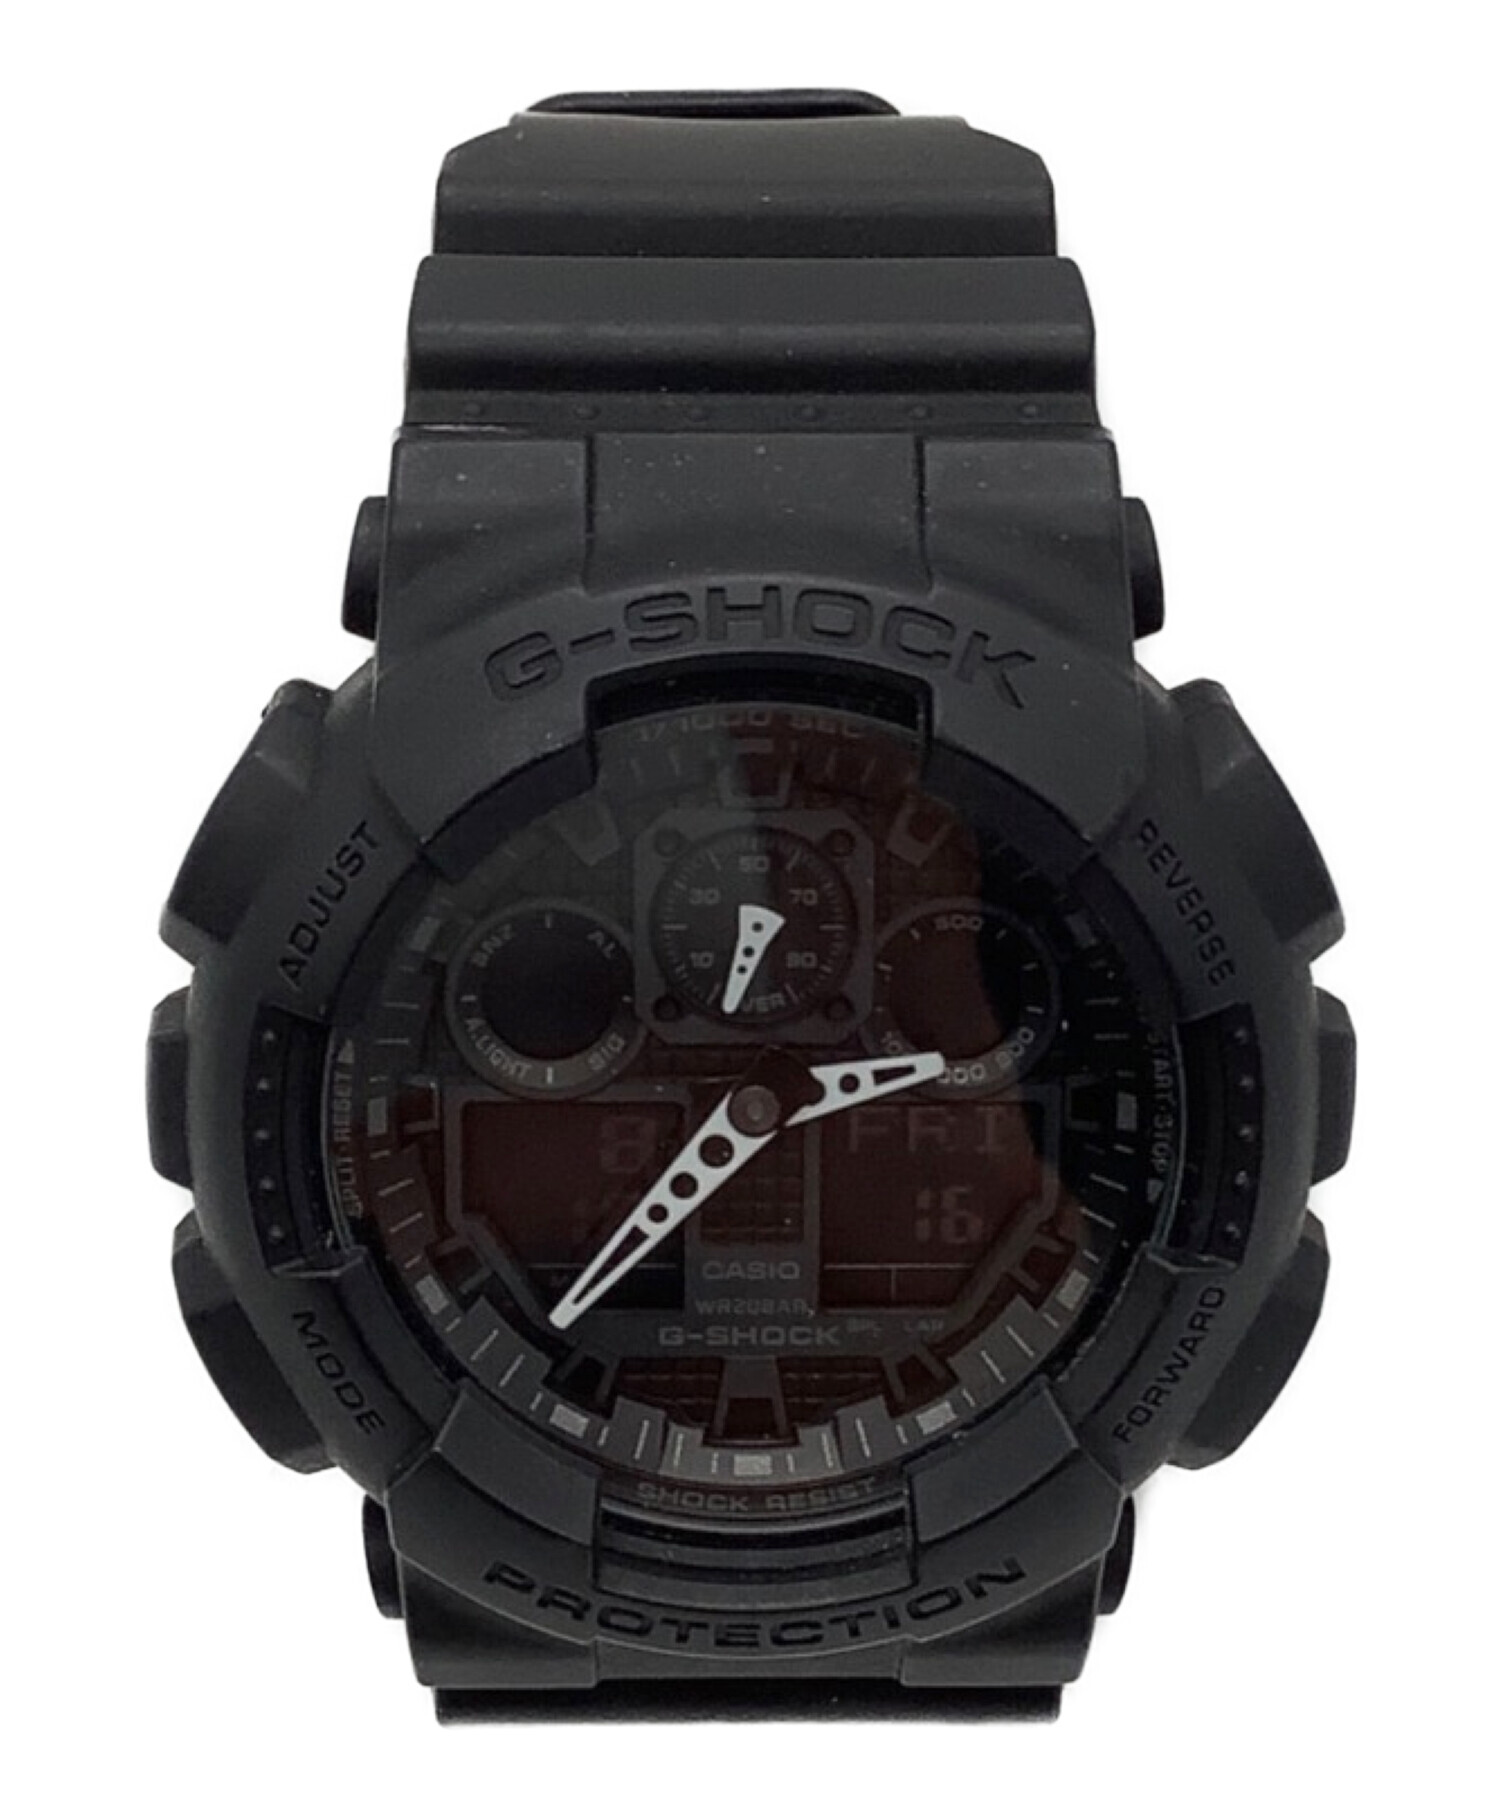 CASIO (カシオ) G-SHOCK GA-100-1A1JF 腕時計